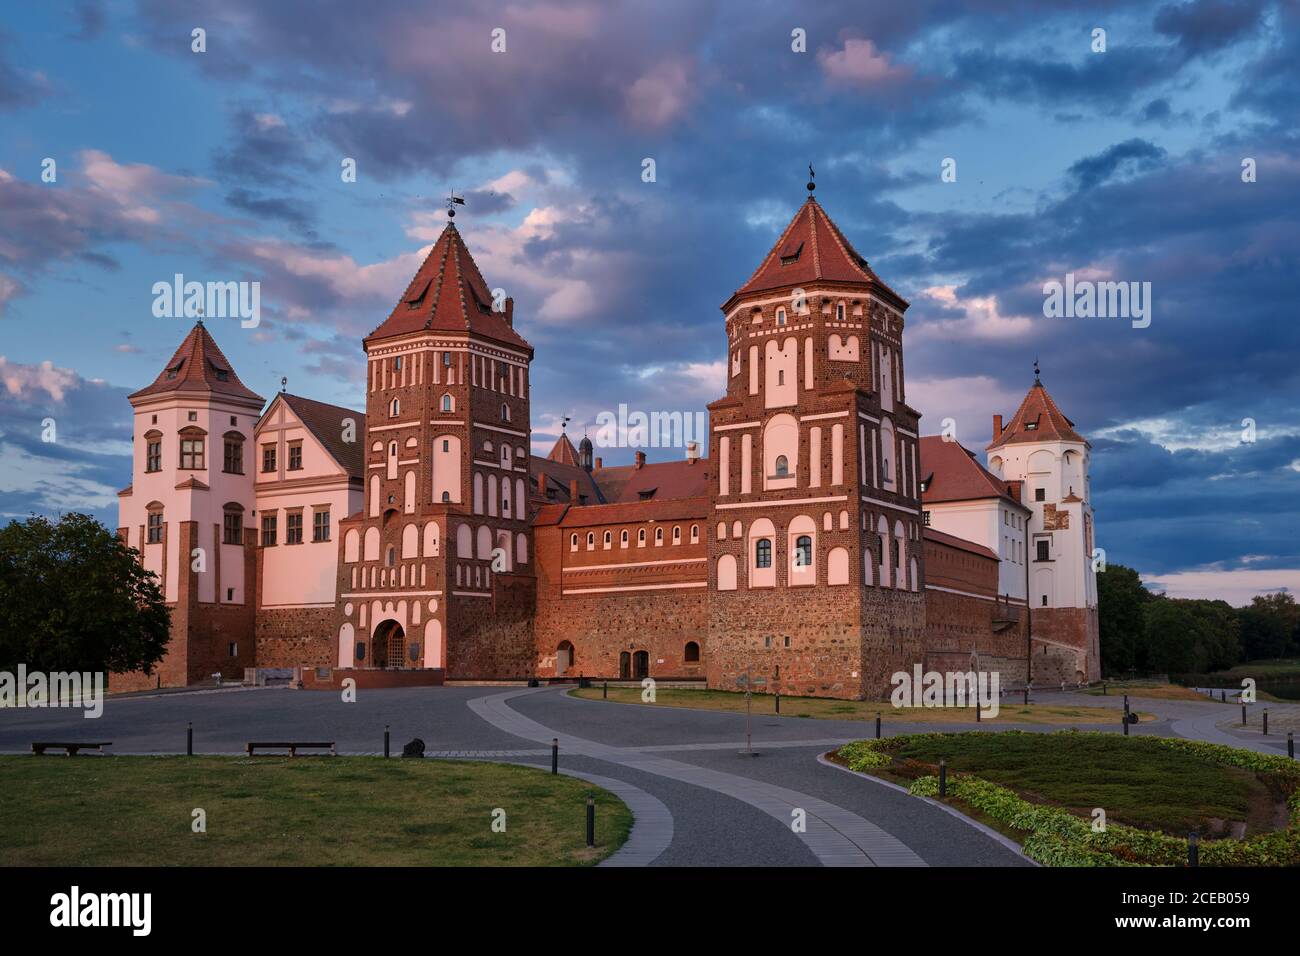 Belorussian tourist landmark attraction Mir Castle at sunset, Grodno region, Belarus Stock Photo